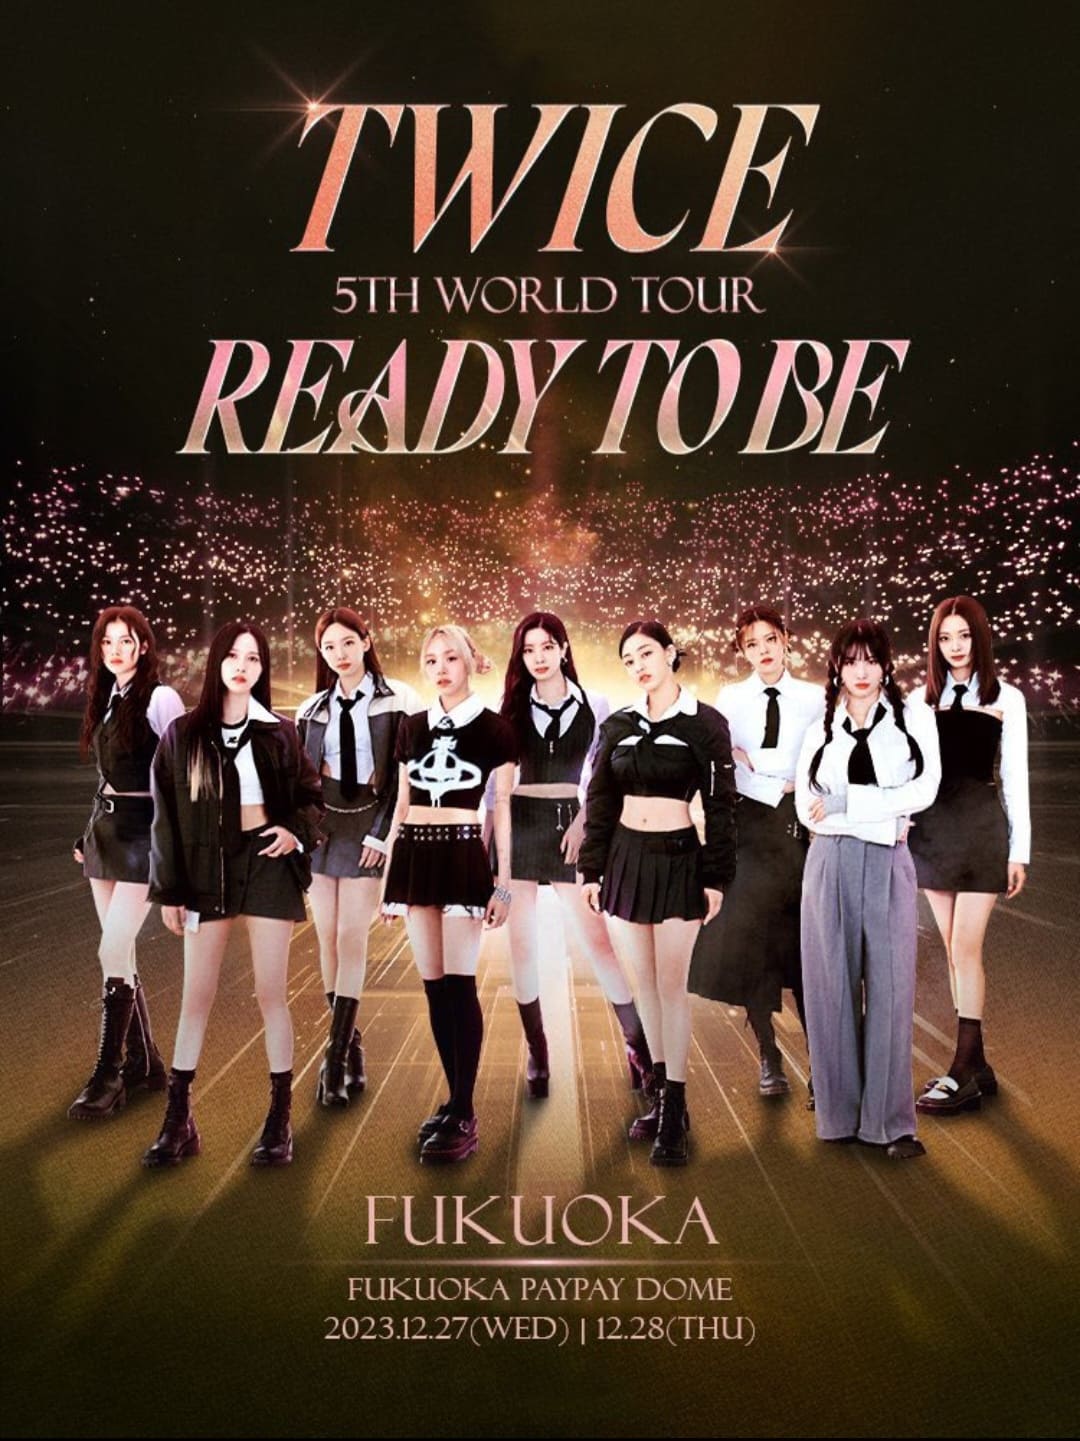 Beyond LIVE - TWICE 5TH WORLD TOUR 'Ready To Be': Fukuoka